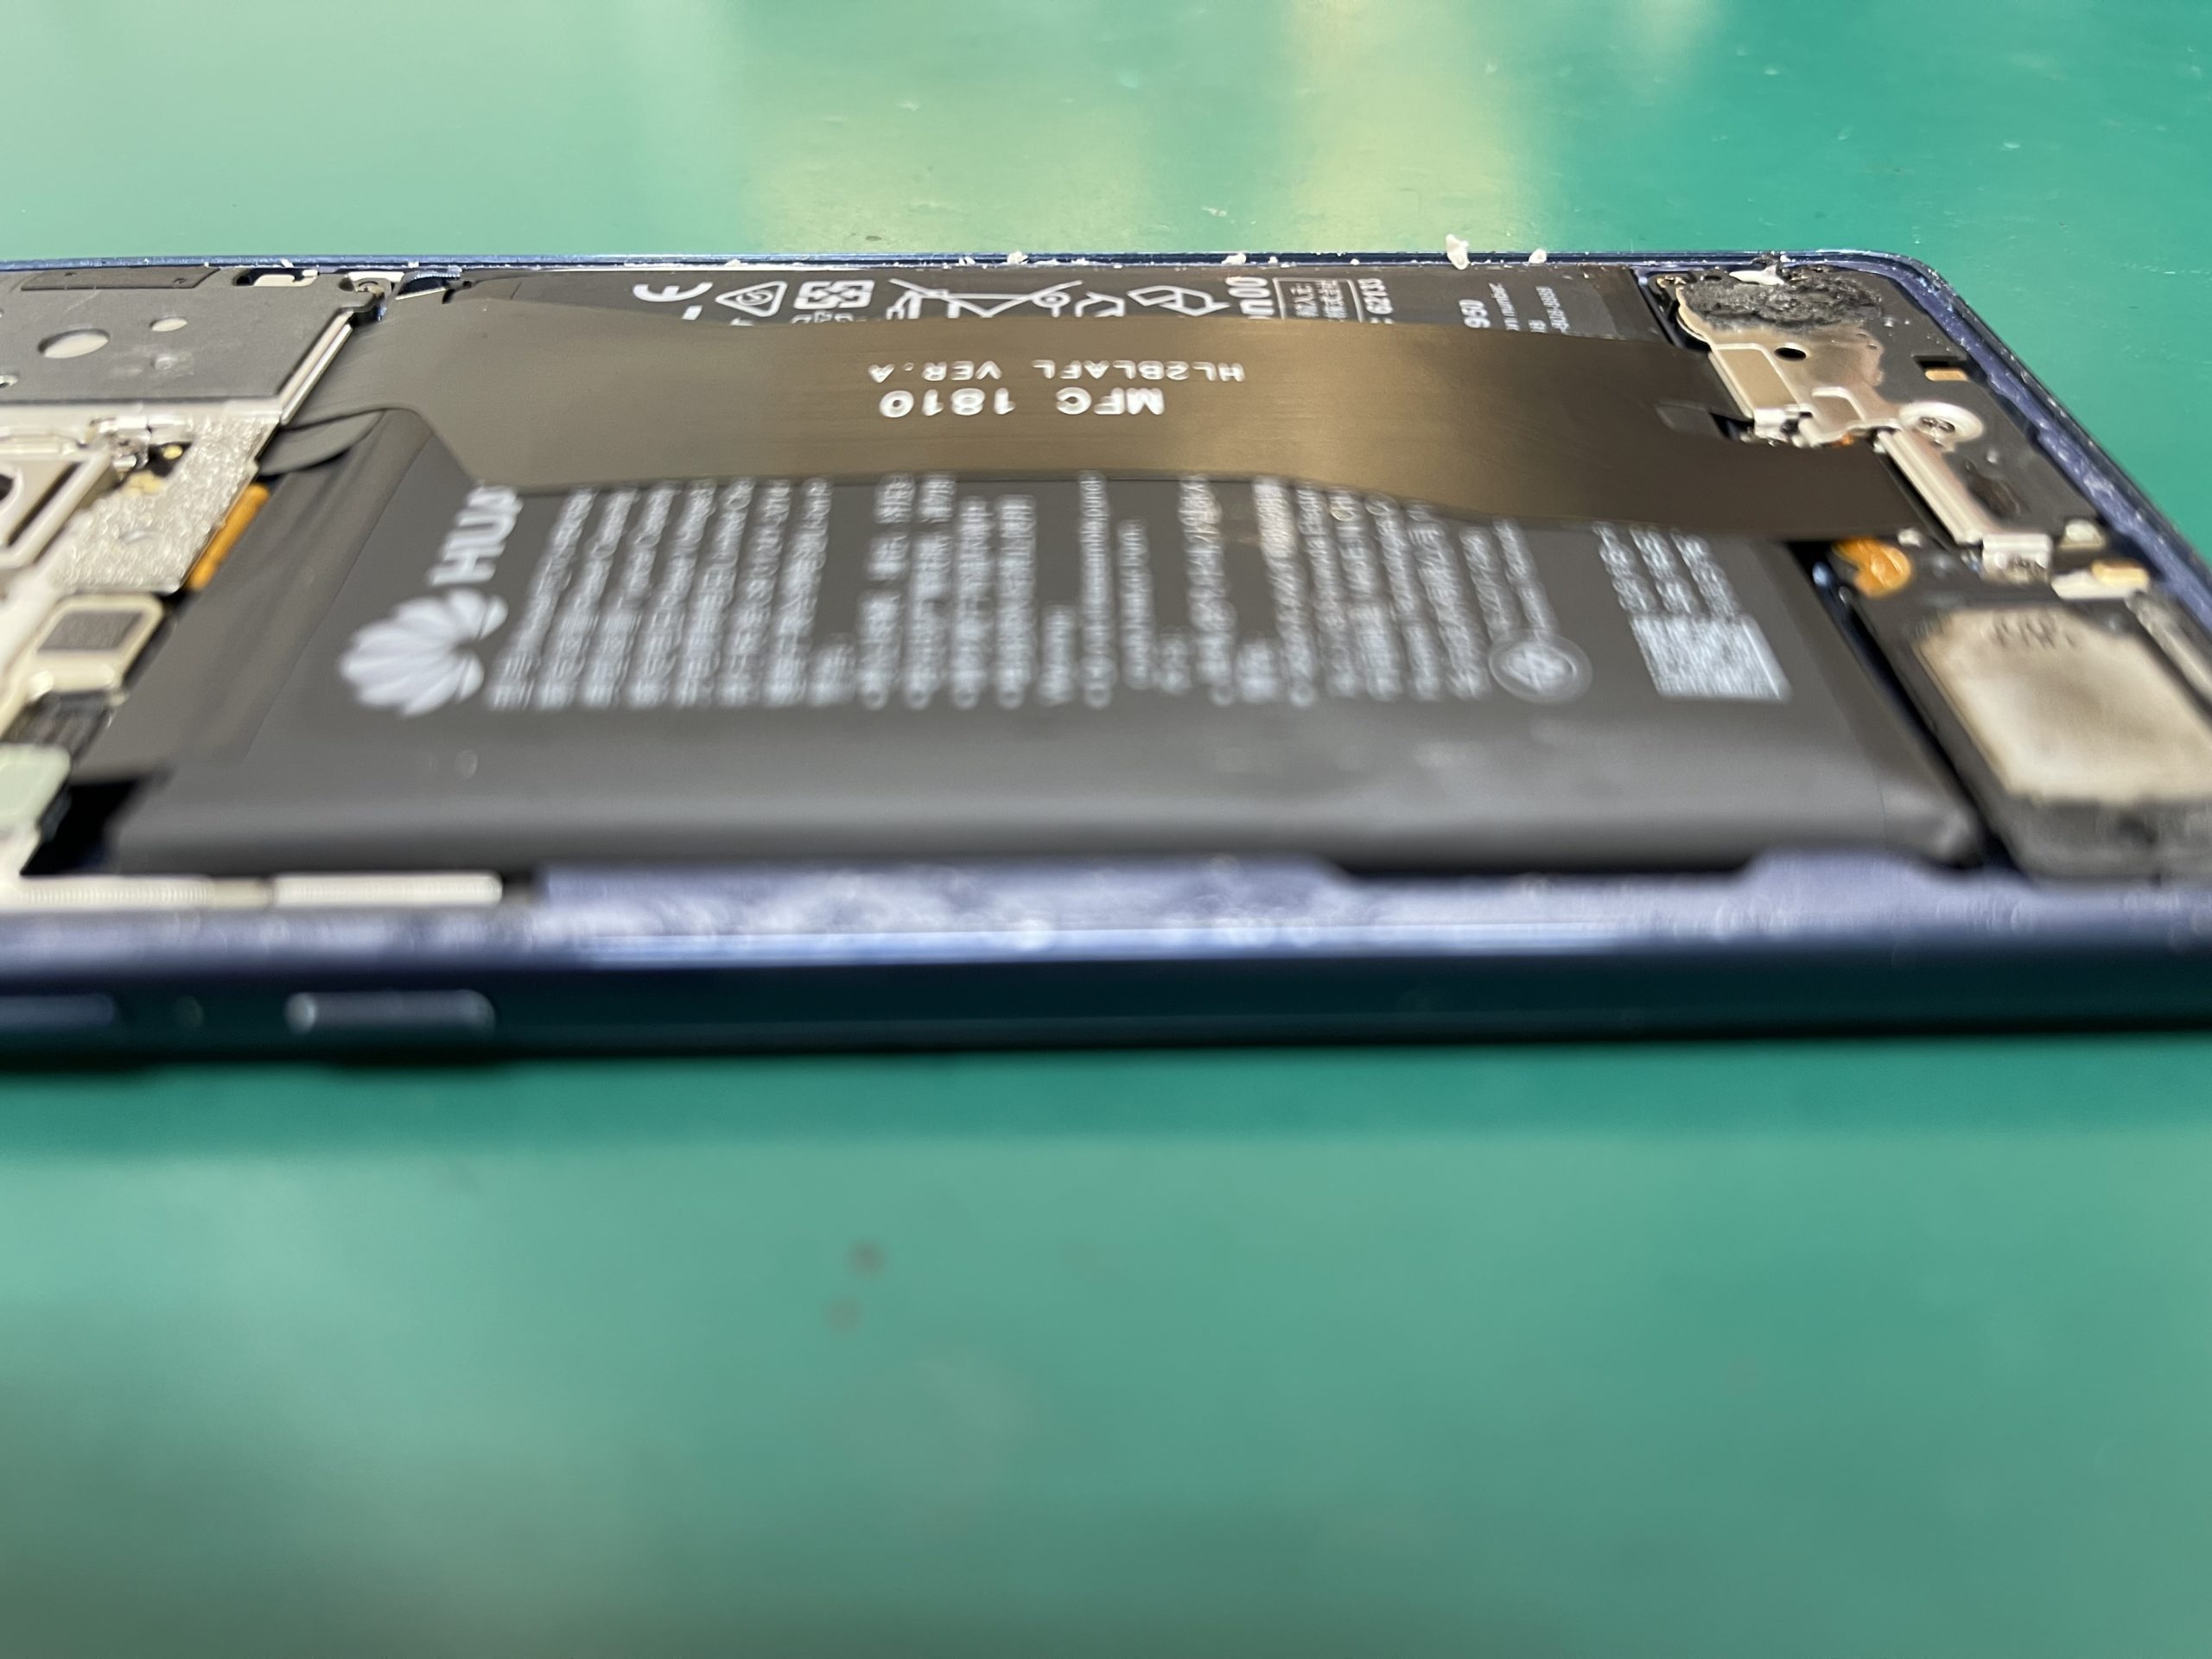 Huaweiシリーズのバッテリー交換も即日で対応 スマホ修理の Skillone スキルワン スマホ修理の Skillone スキルワン